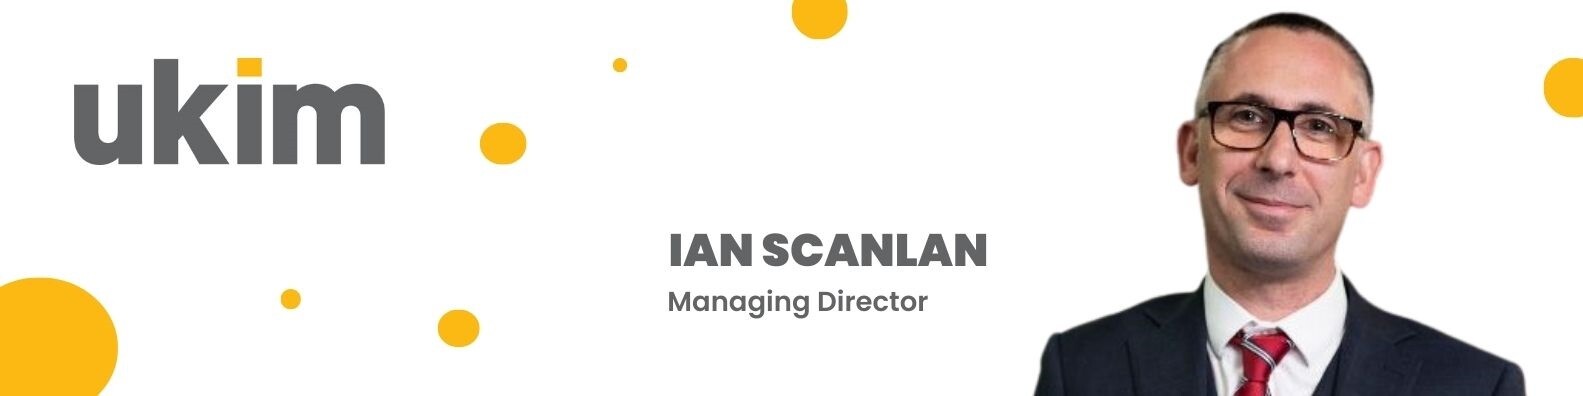 ian-scanlan-intro-banner